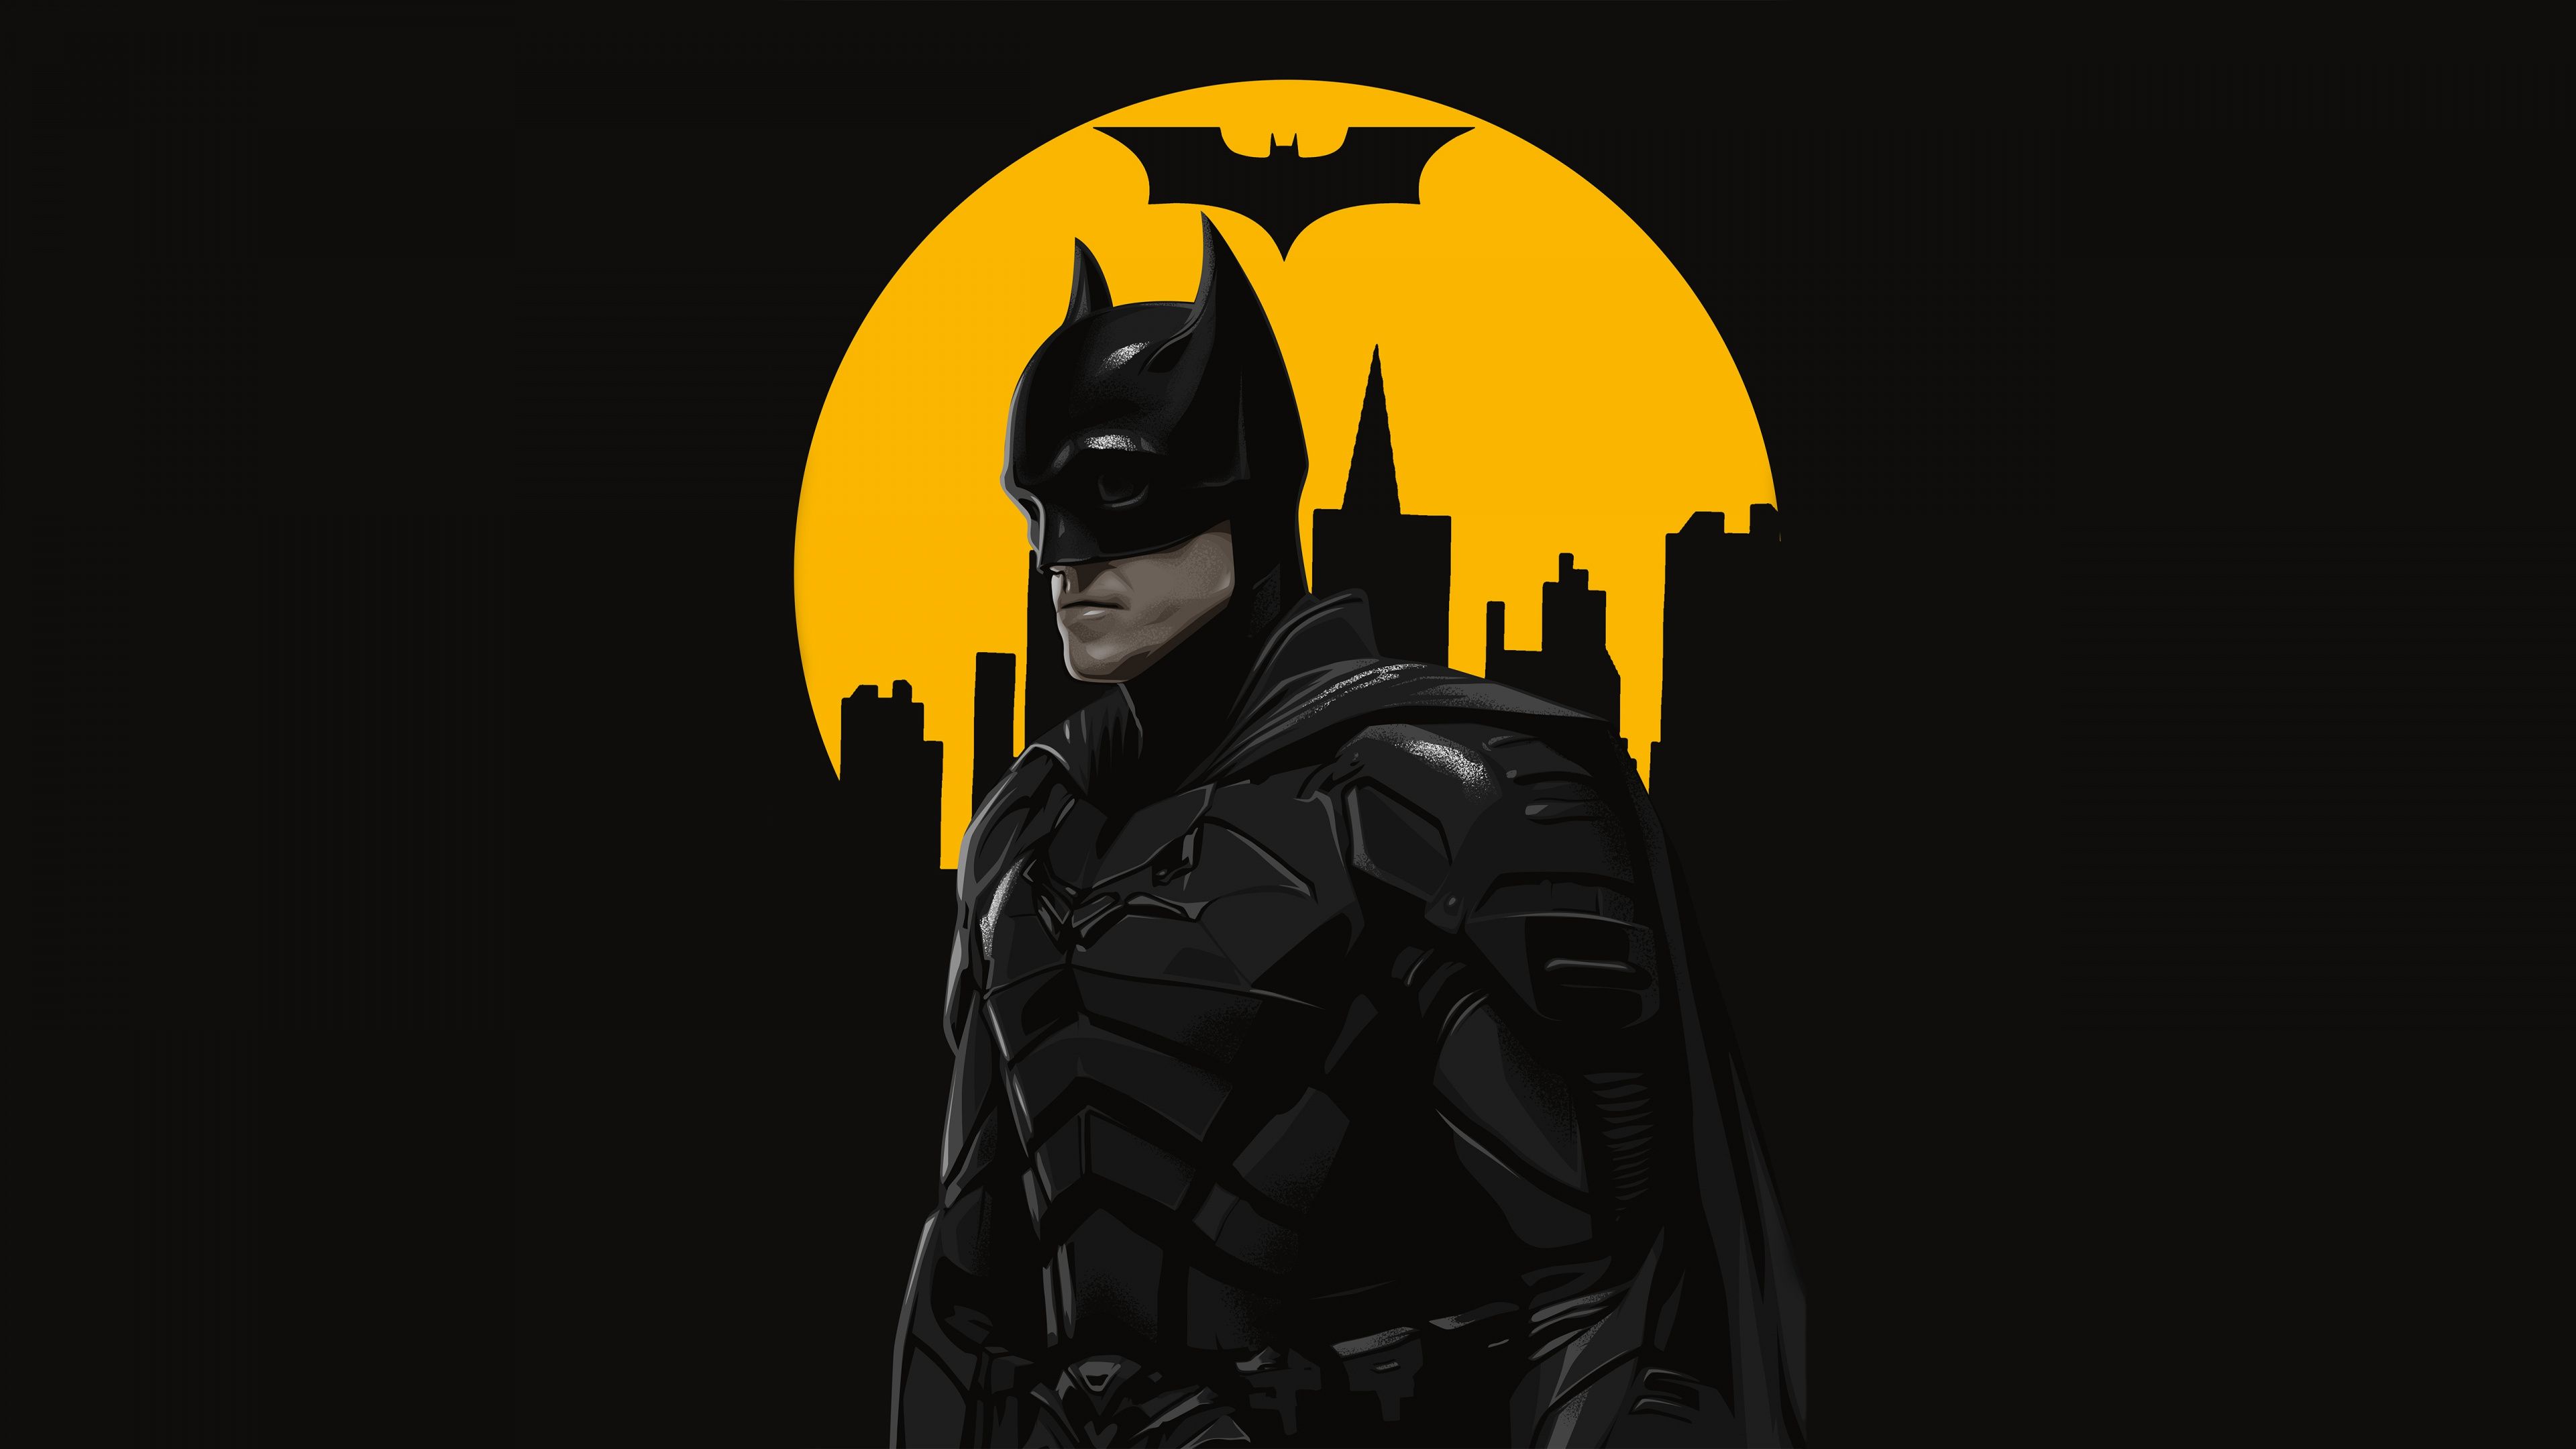 Download The Batman, 2021 movie, silhouette art wallpaper, 3840x 4K UHD 16: Widescreen